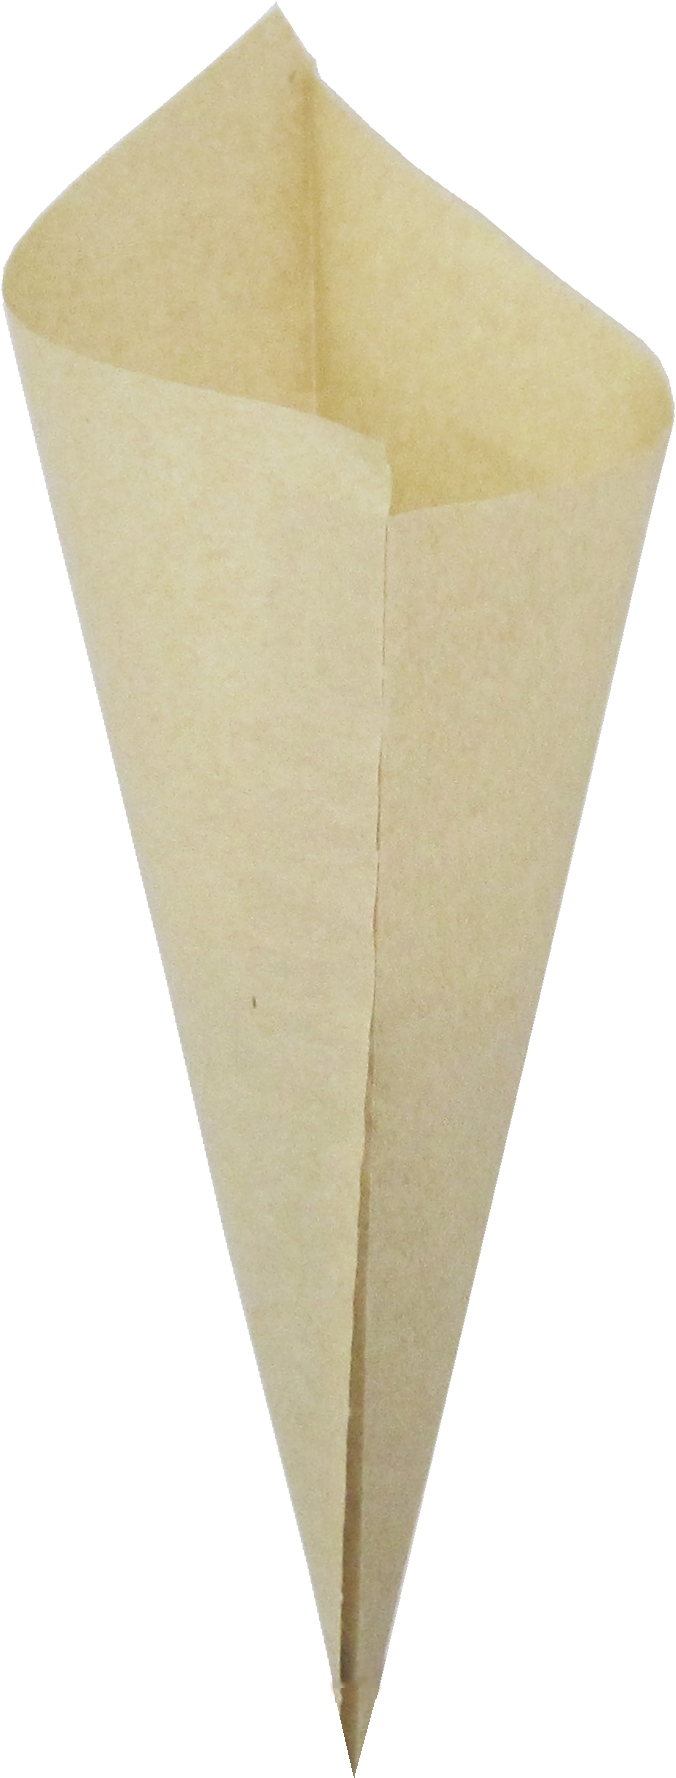 Jumbo K-23 Eco Friendly Brown  Paper Cones. , holds 18.5 oz